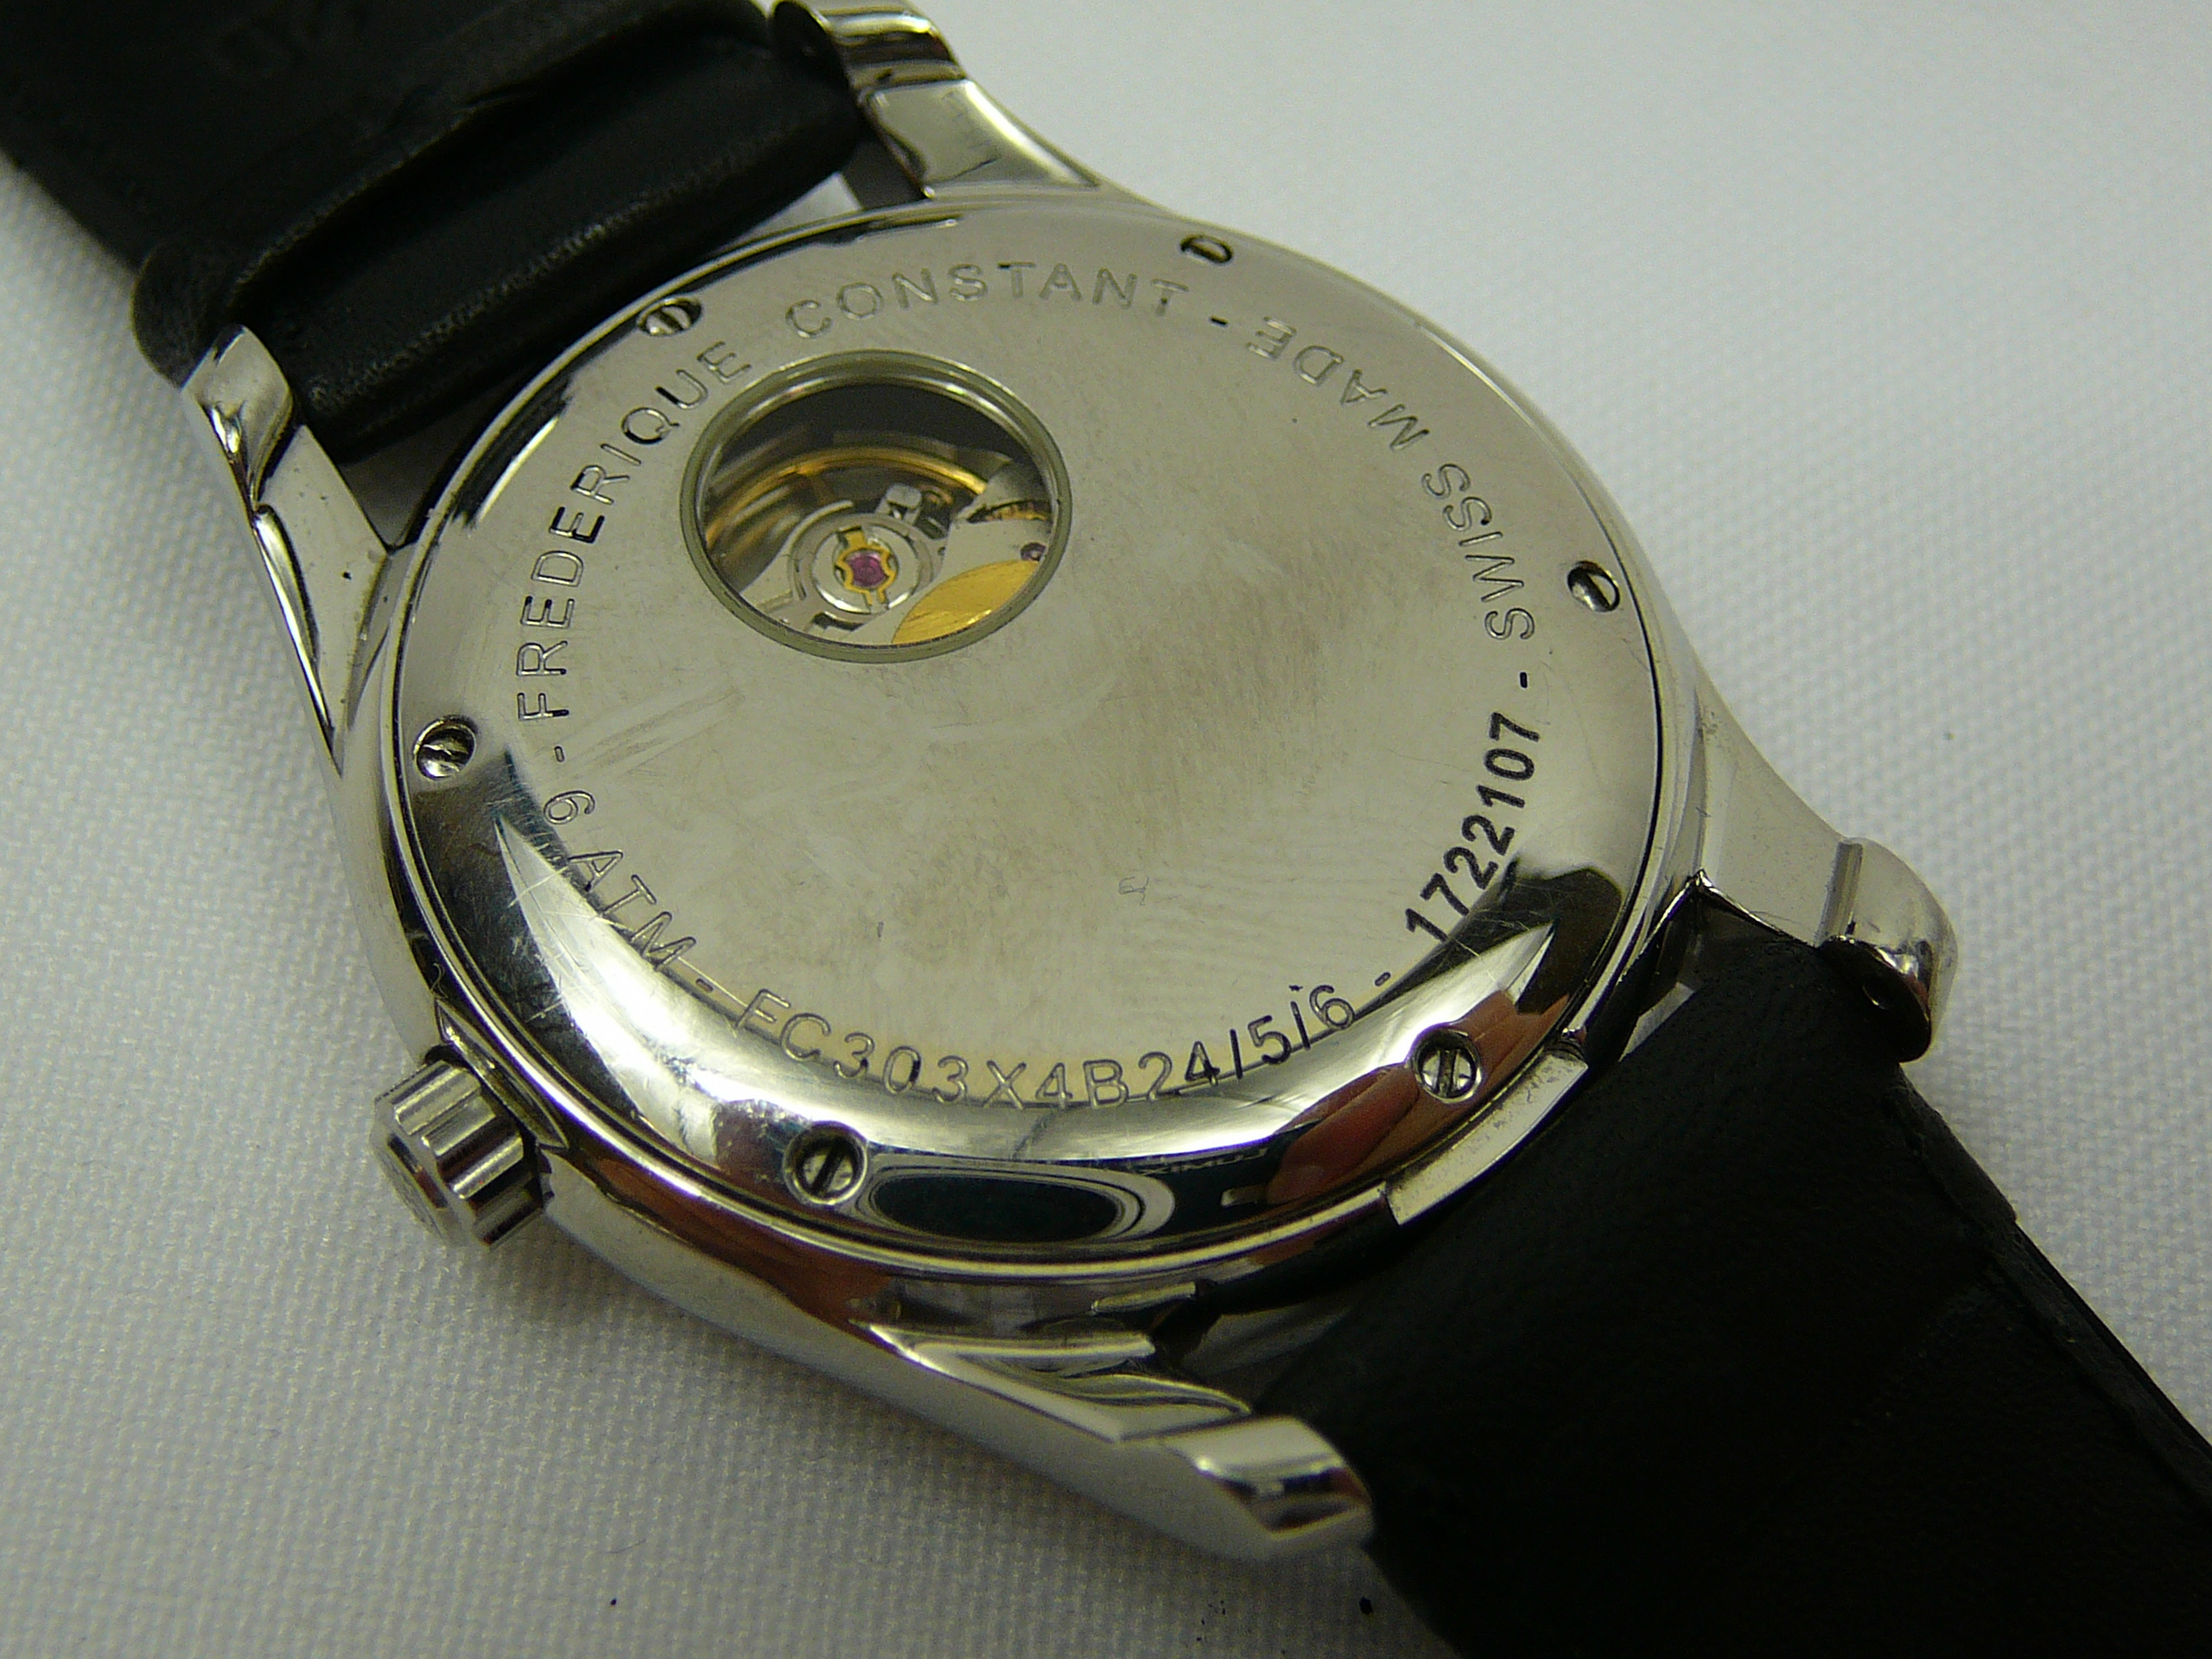 Gents Frederique Constant Wrist Watch - Image 3 of 3